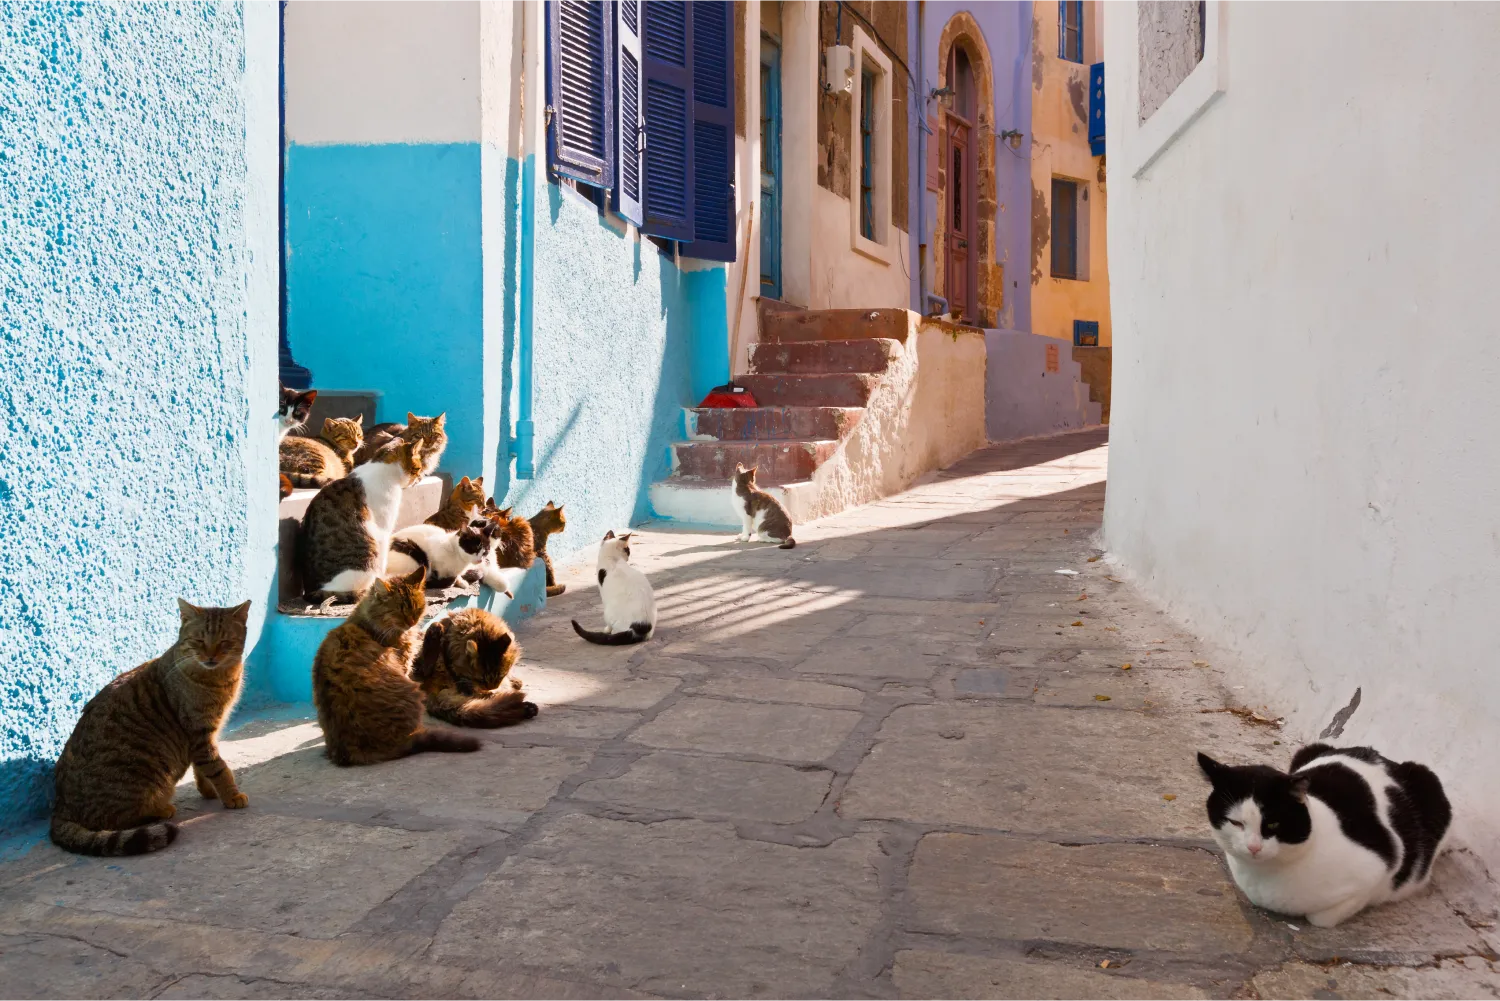 Cats In A Street Of Mandraki Village in Nisyros